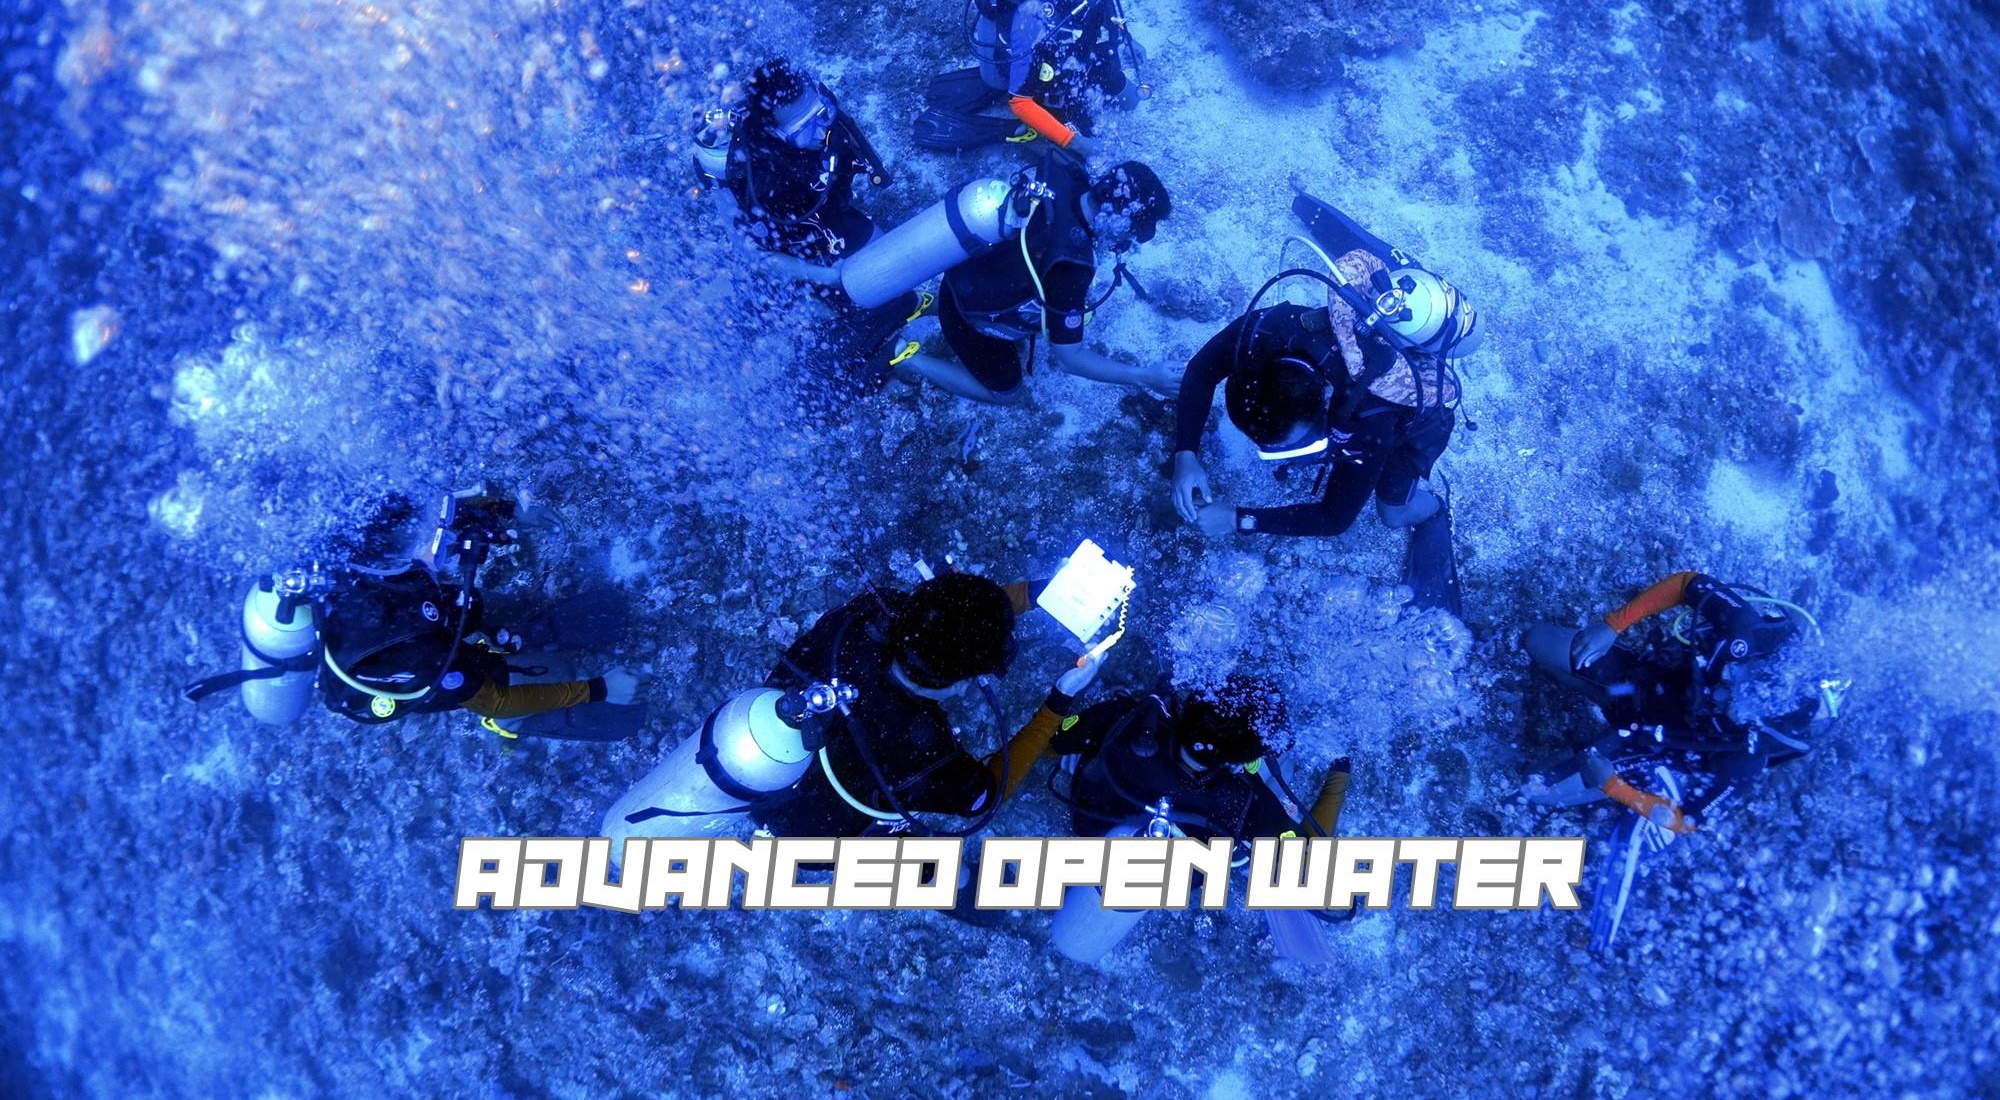 advancedopenwater